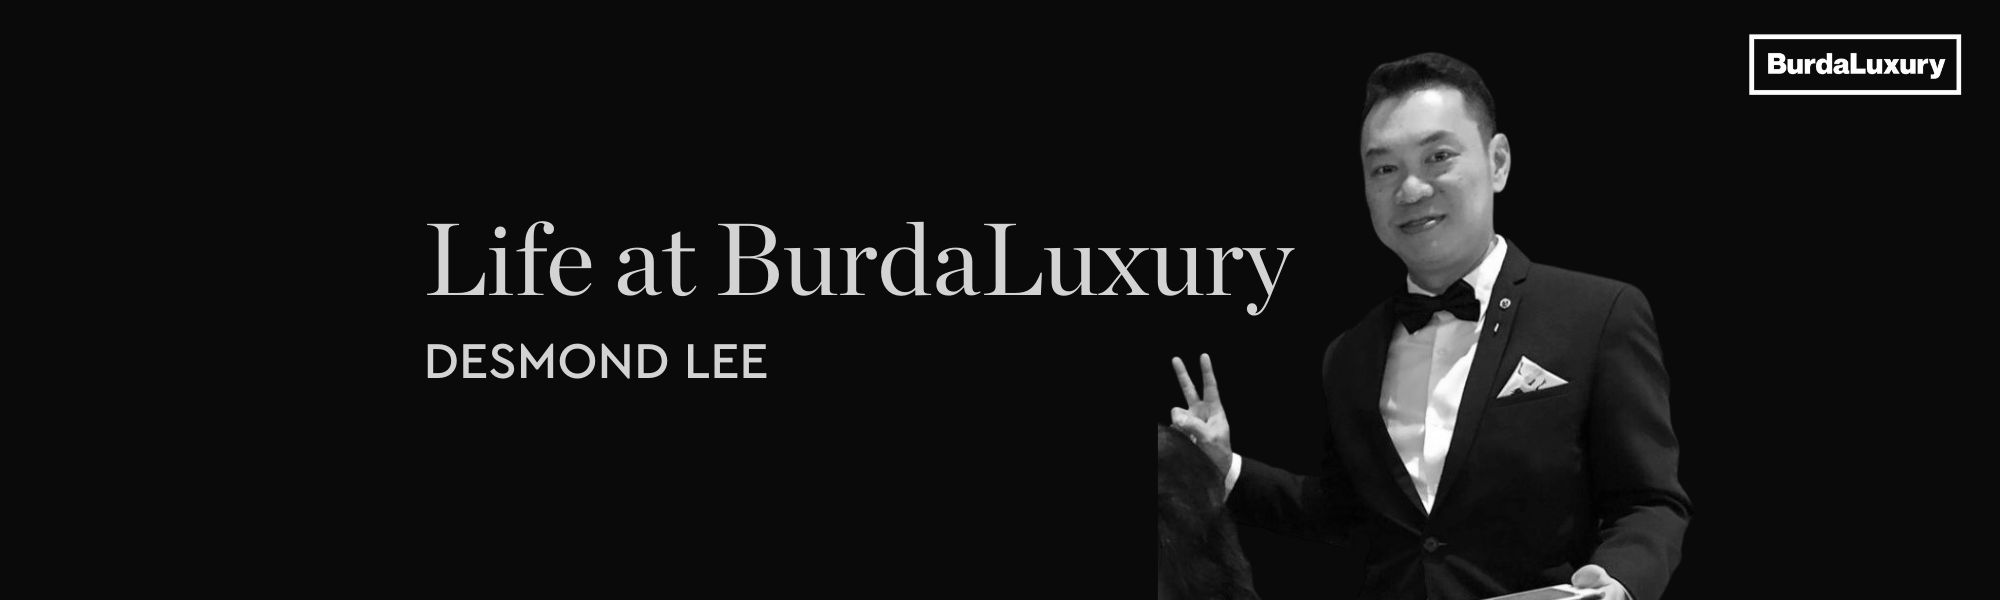 Life at BurdaLuxury - Desmond Lee